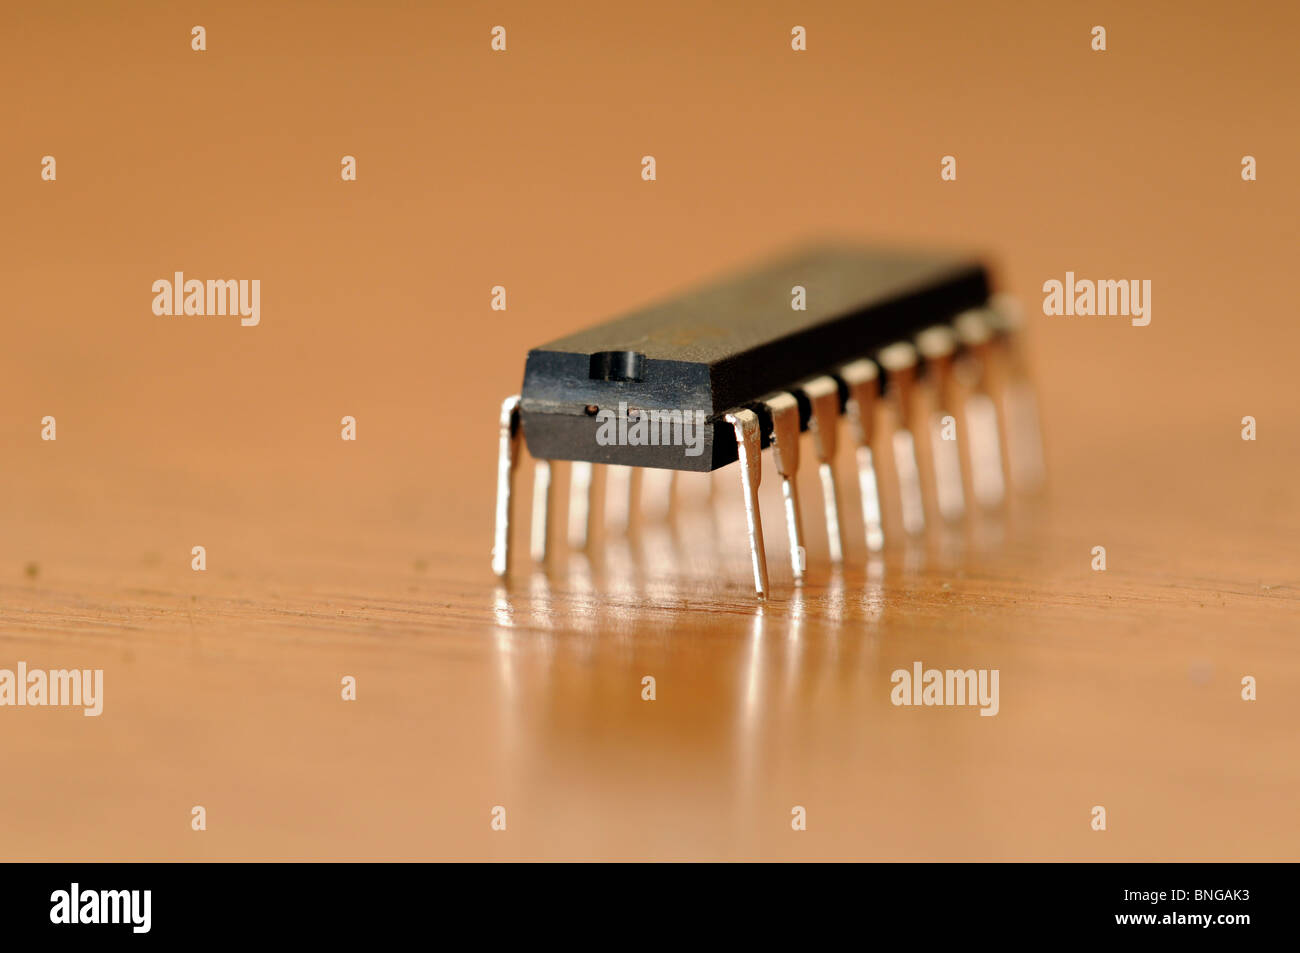 16 Pin IC-chip Stockfoto